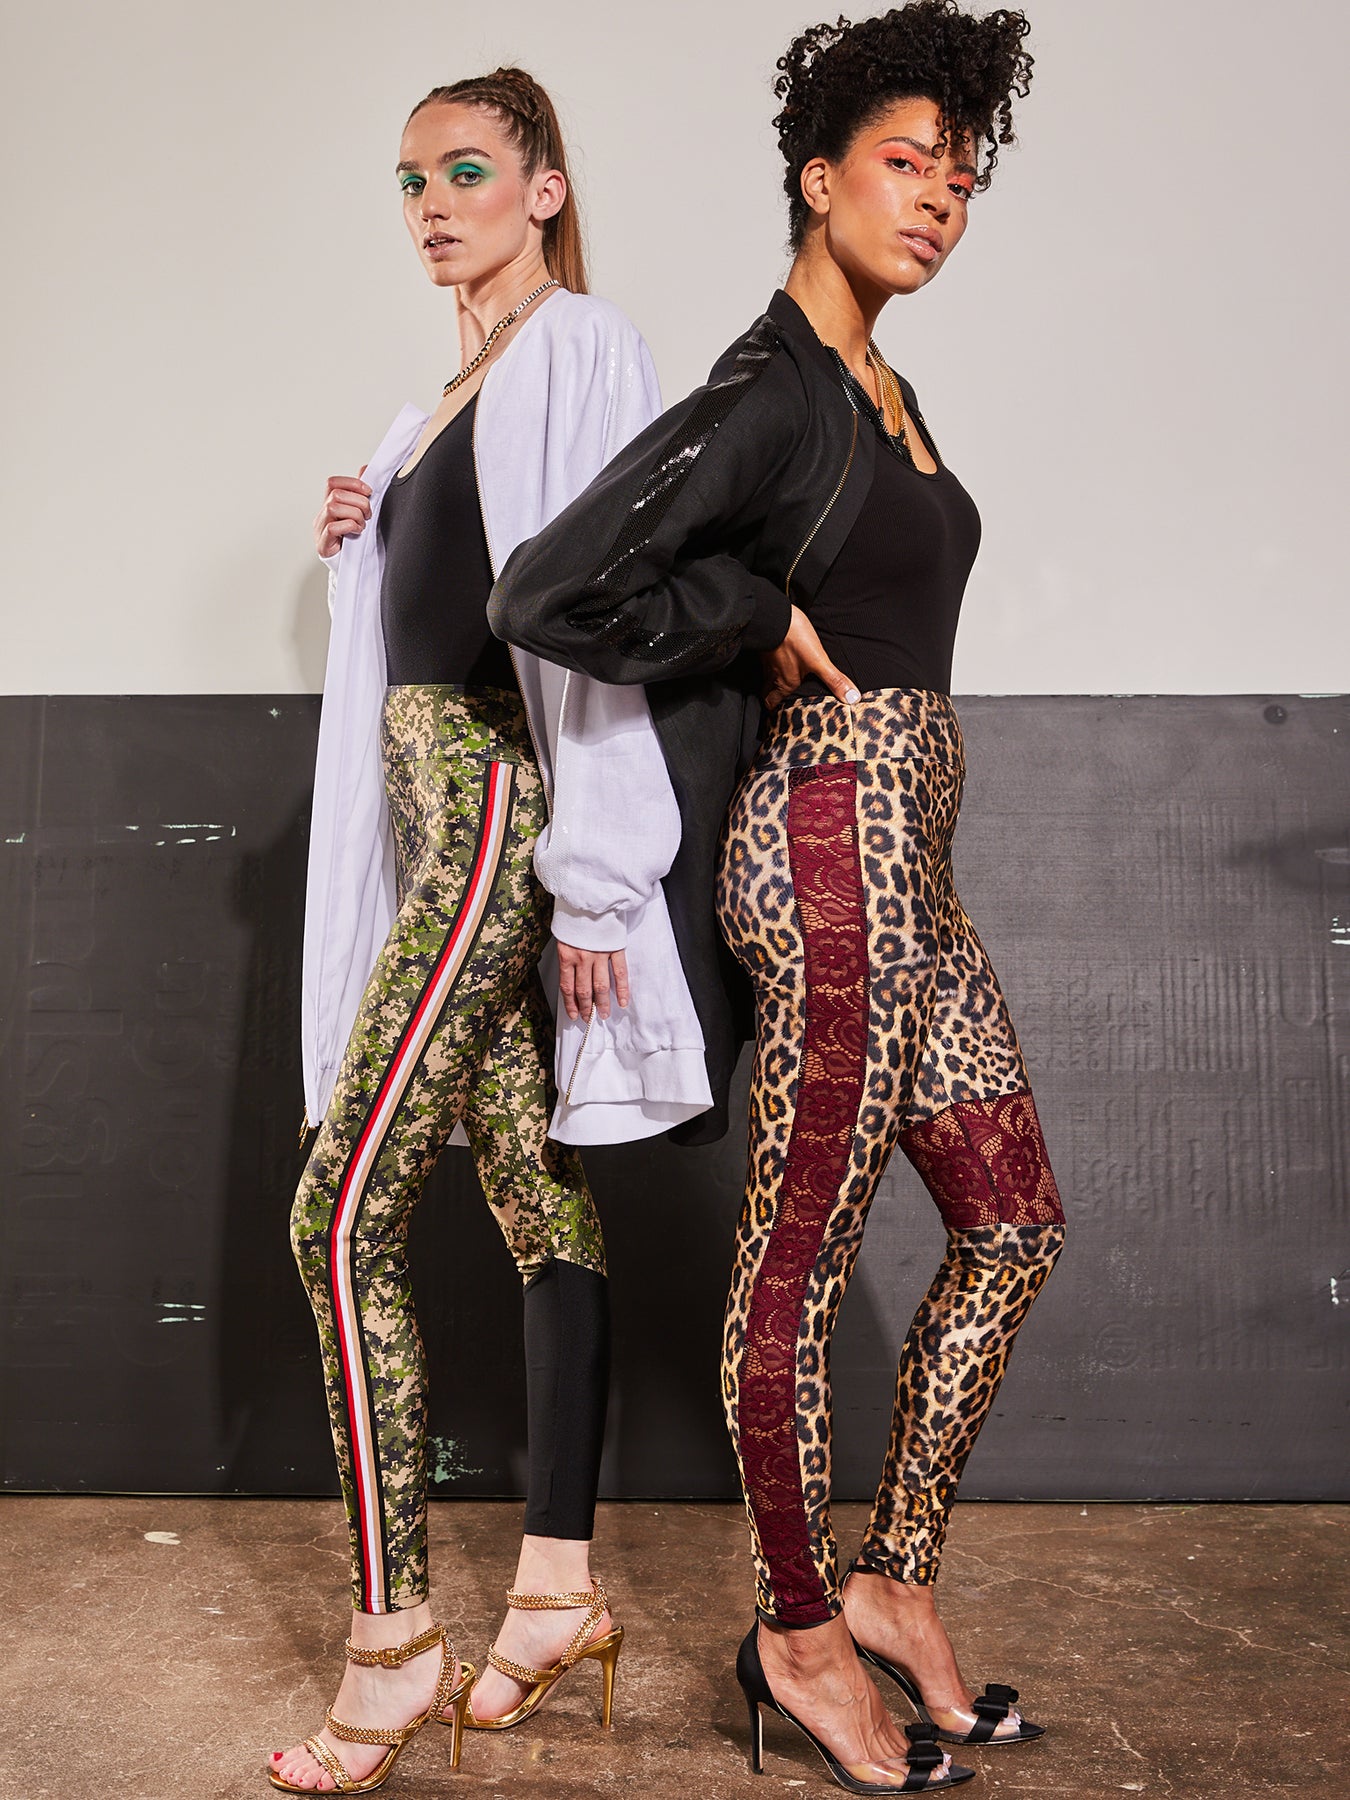 Leggings in Leopard Print and Lace – Amy Page DeBlasio